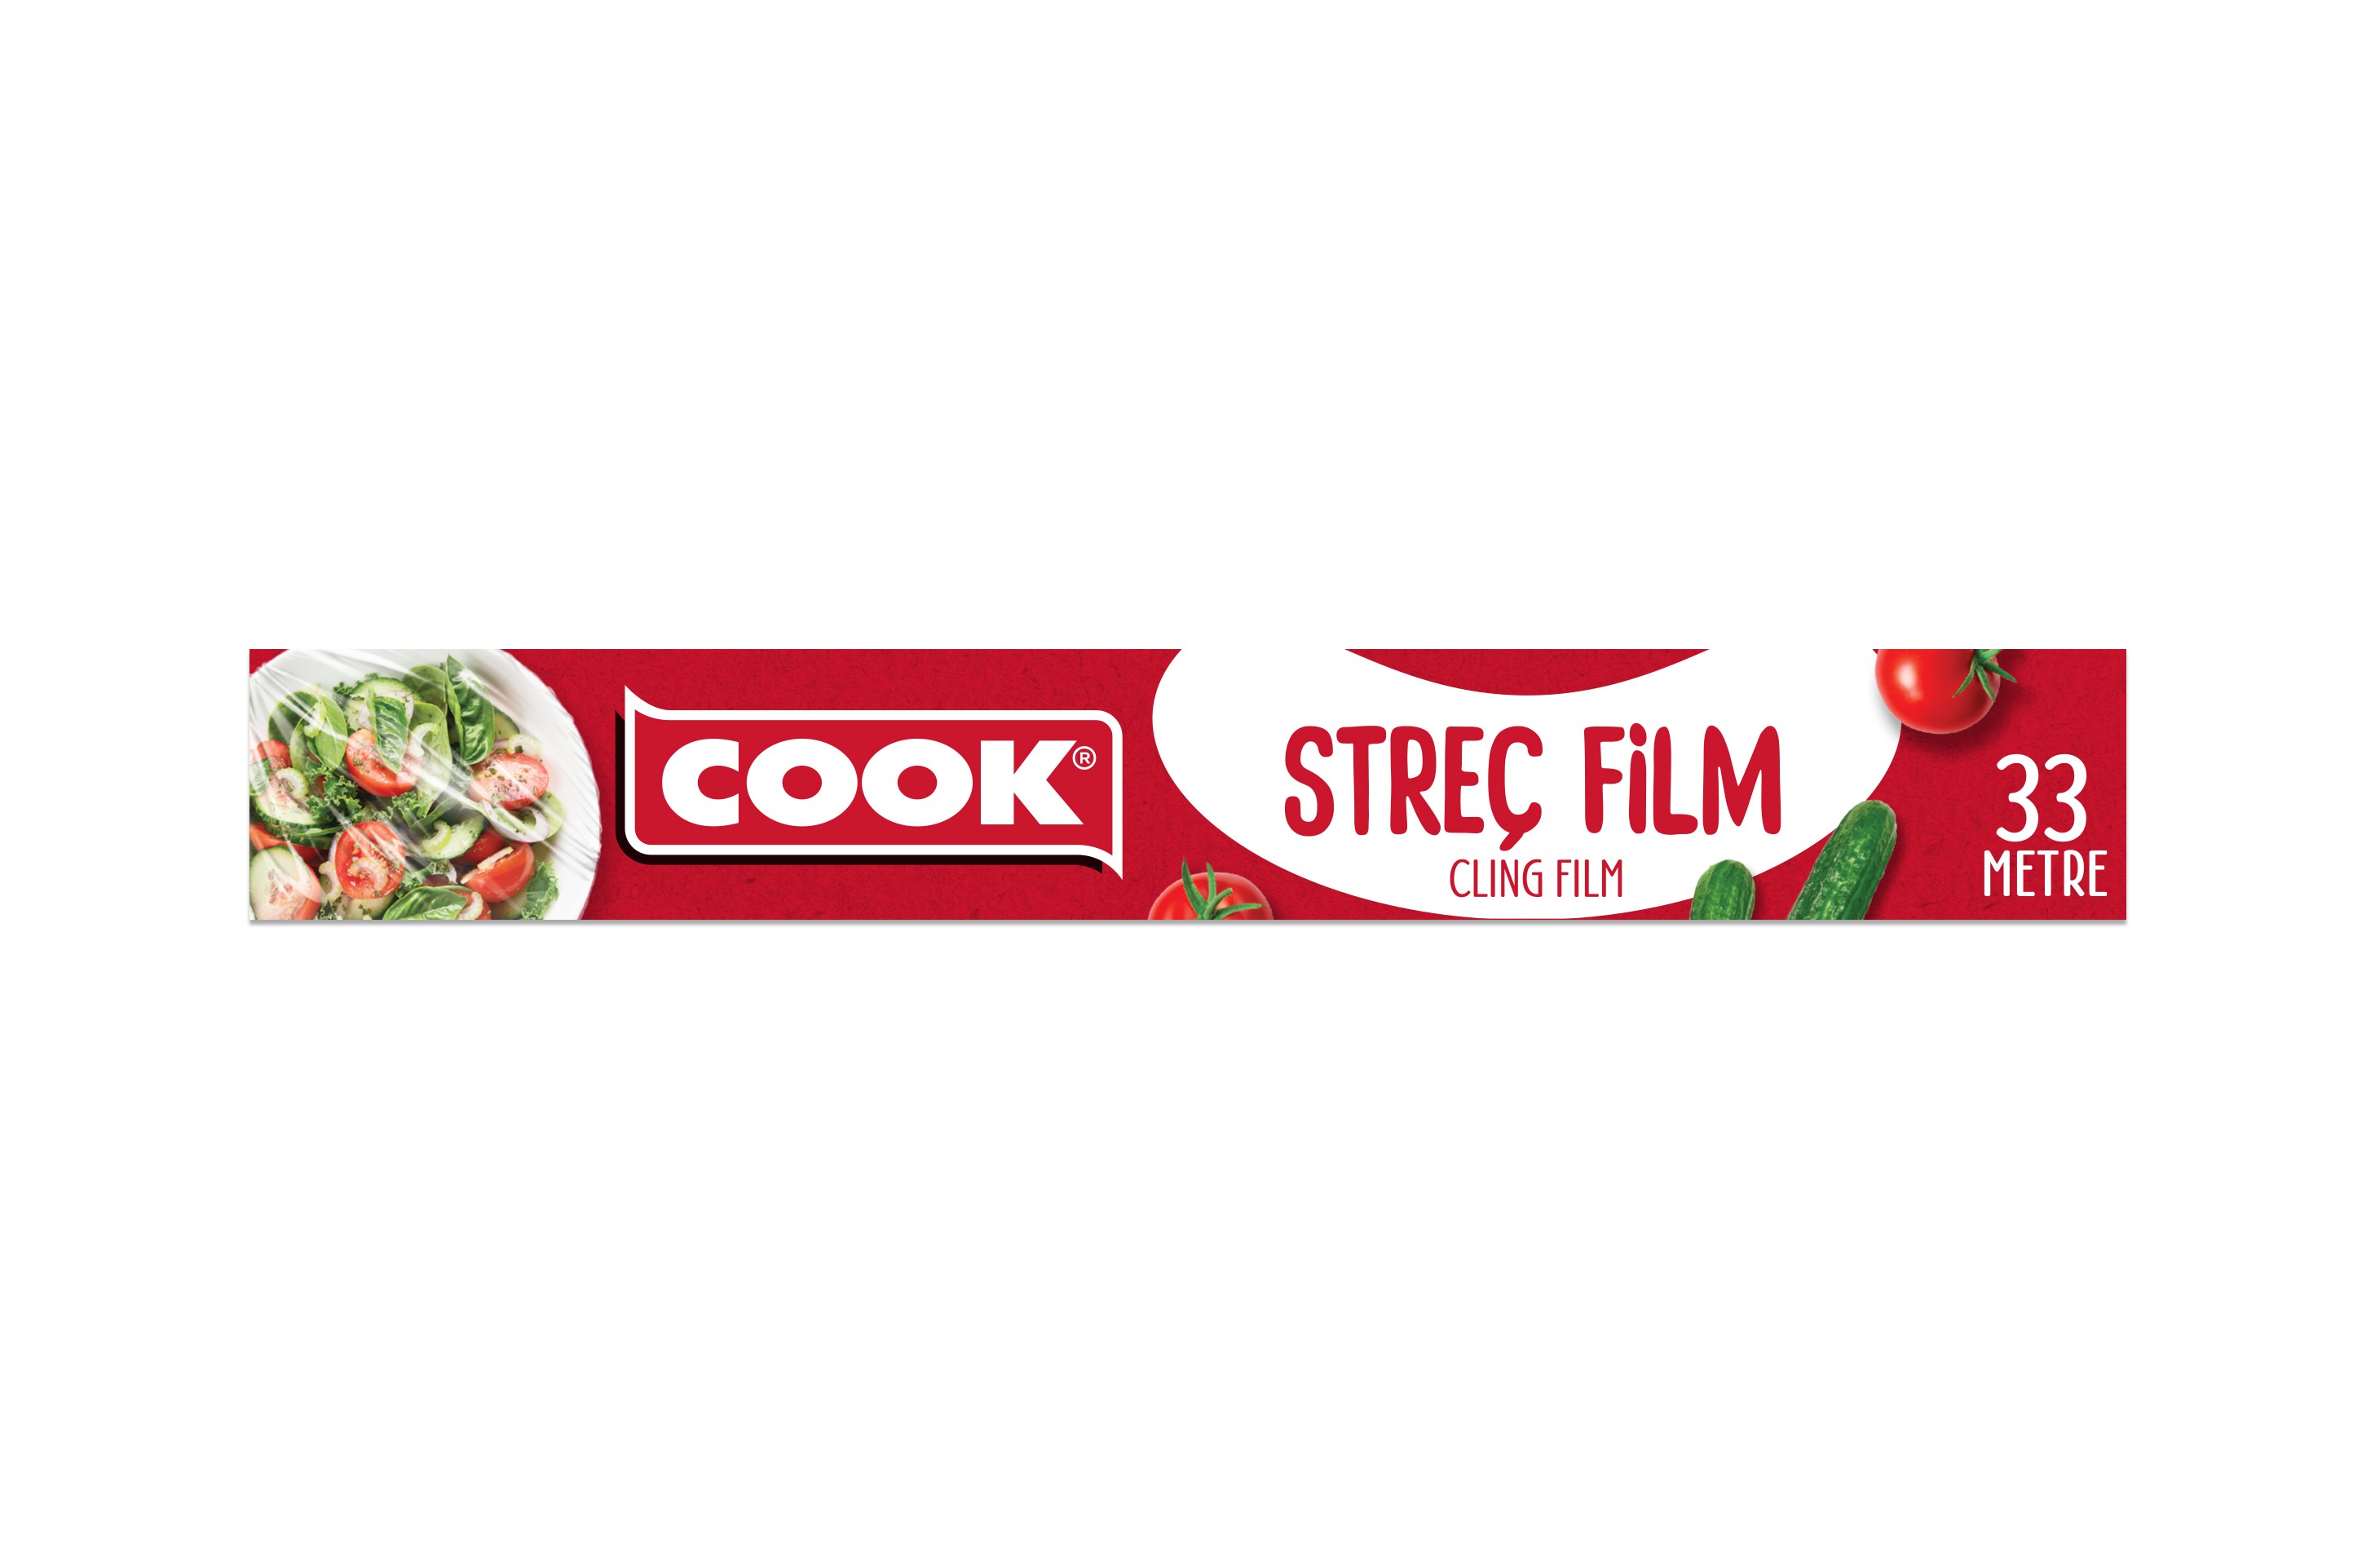 COOK Streç Film 30 cm* 33 metre